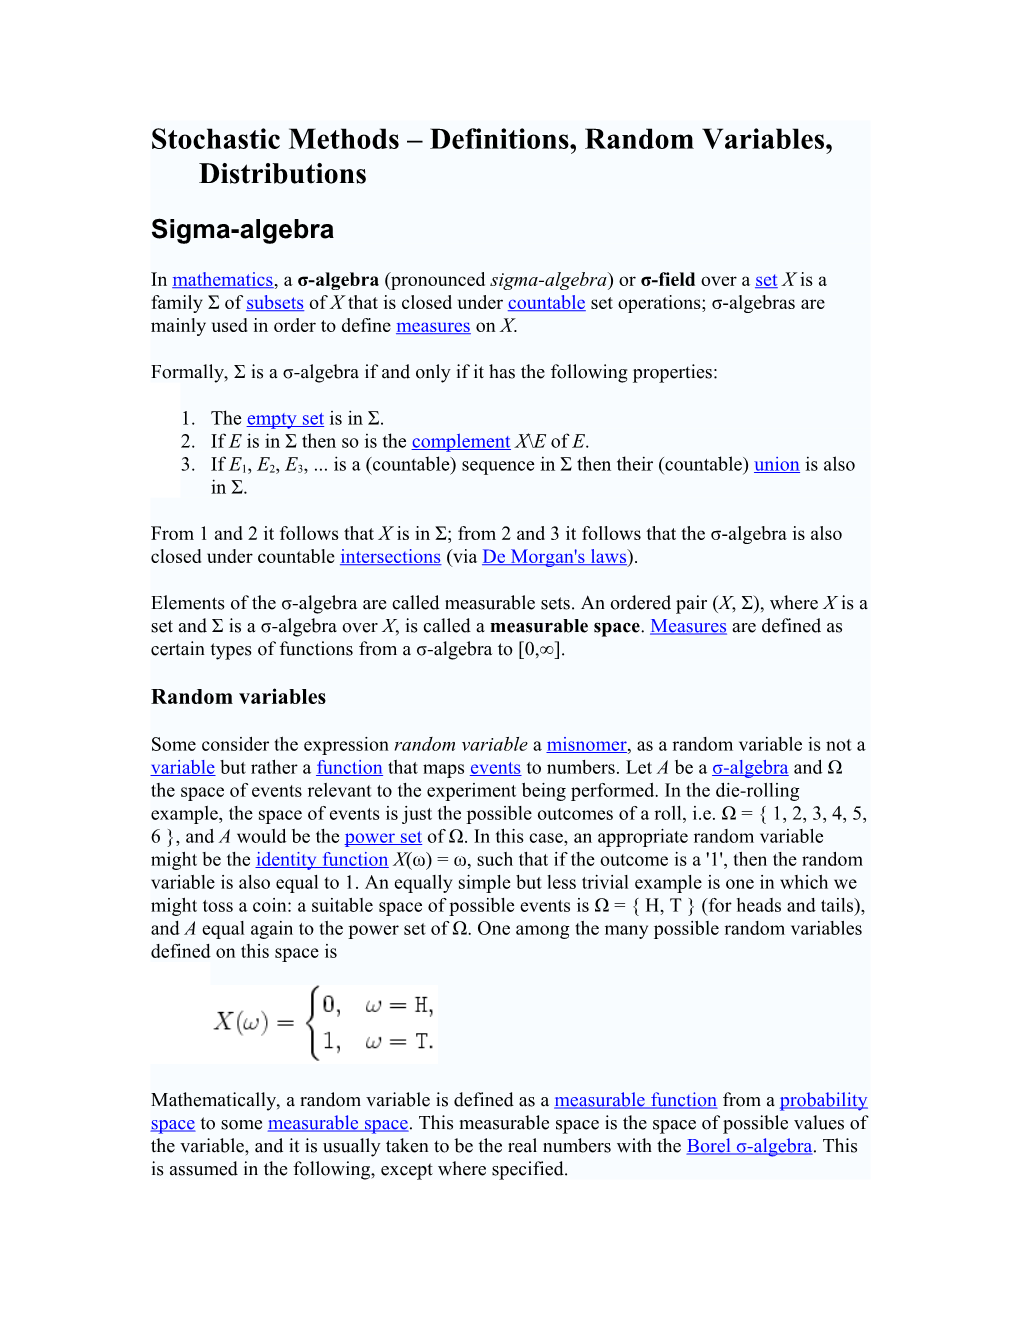 Stochastic Methods Definitions, Random Variables, Distributions